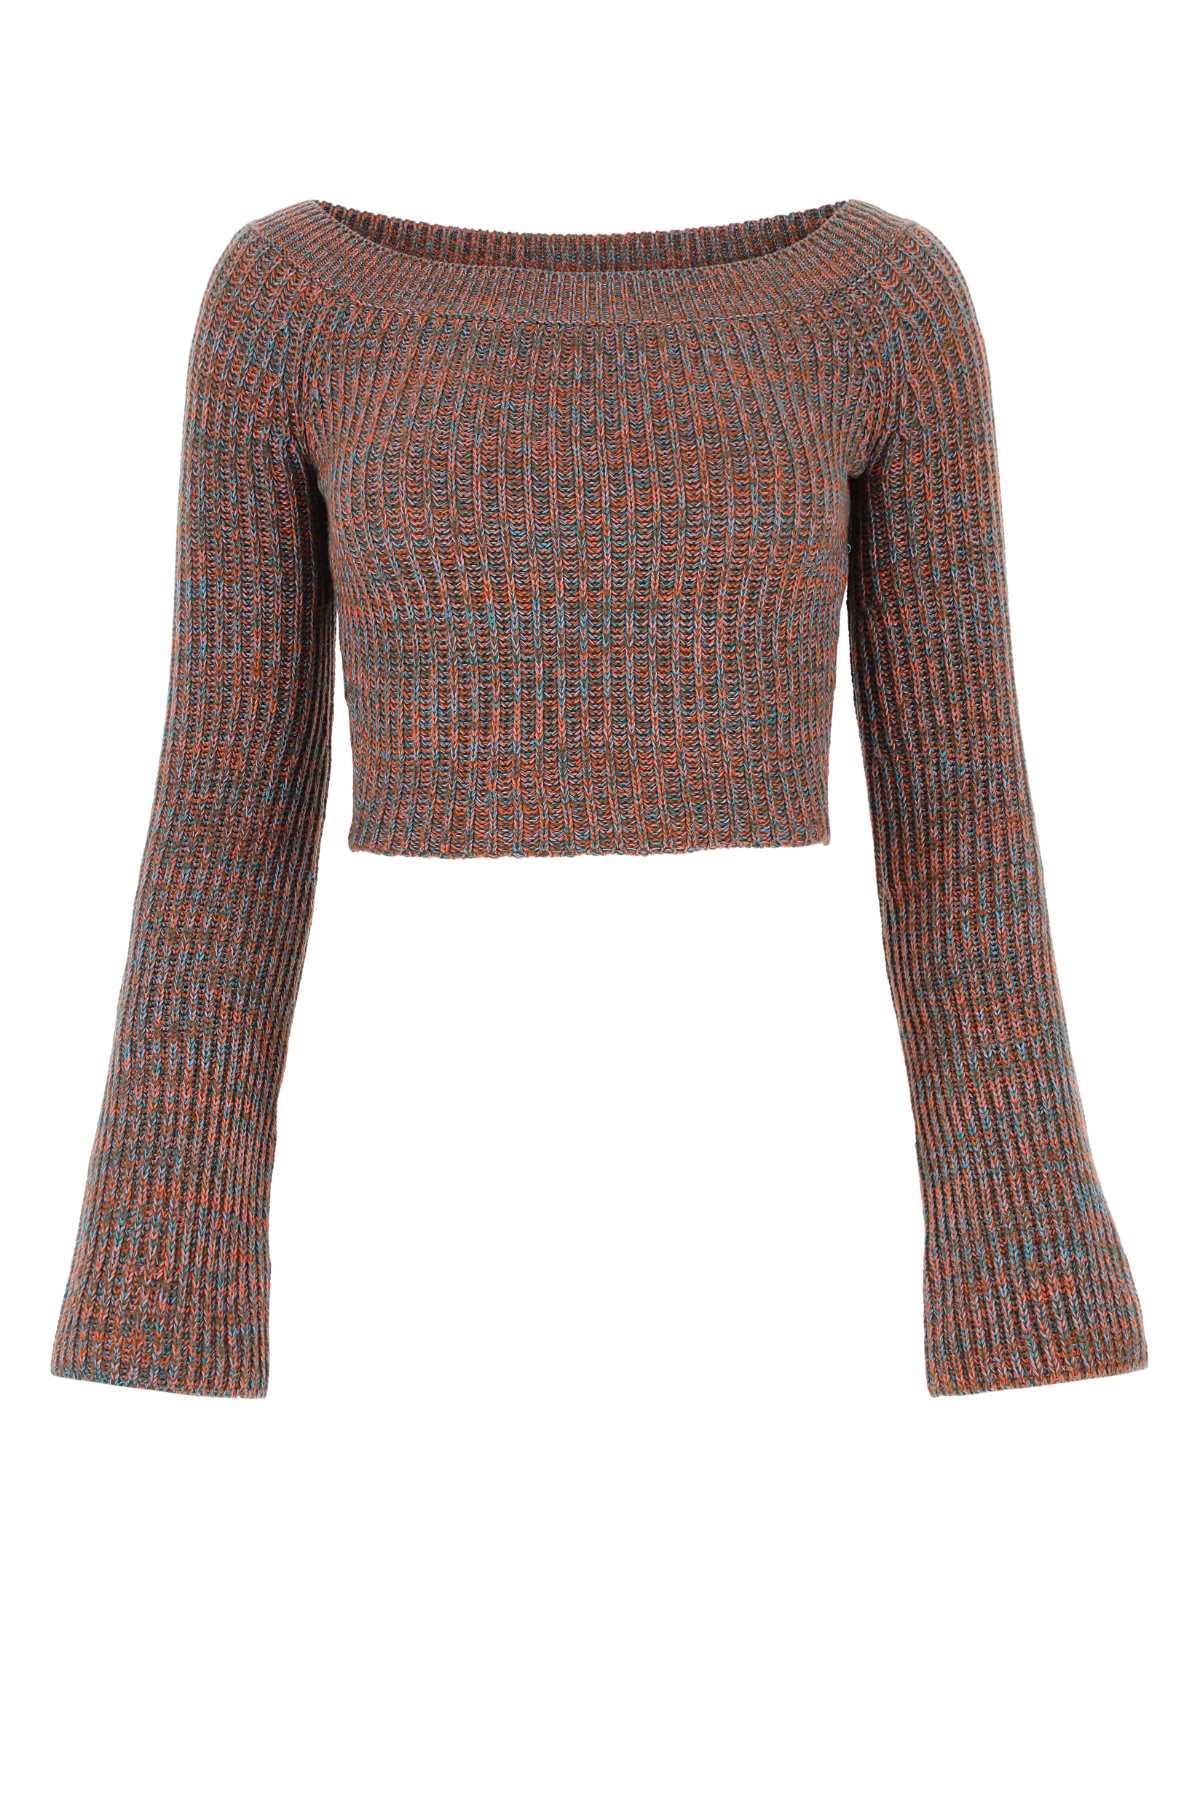 Chloé Cashmere Blend Sweater